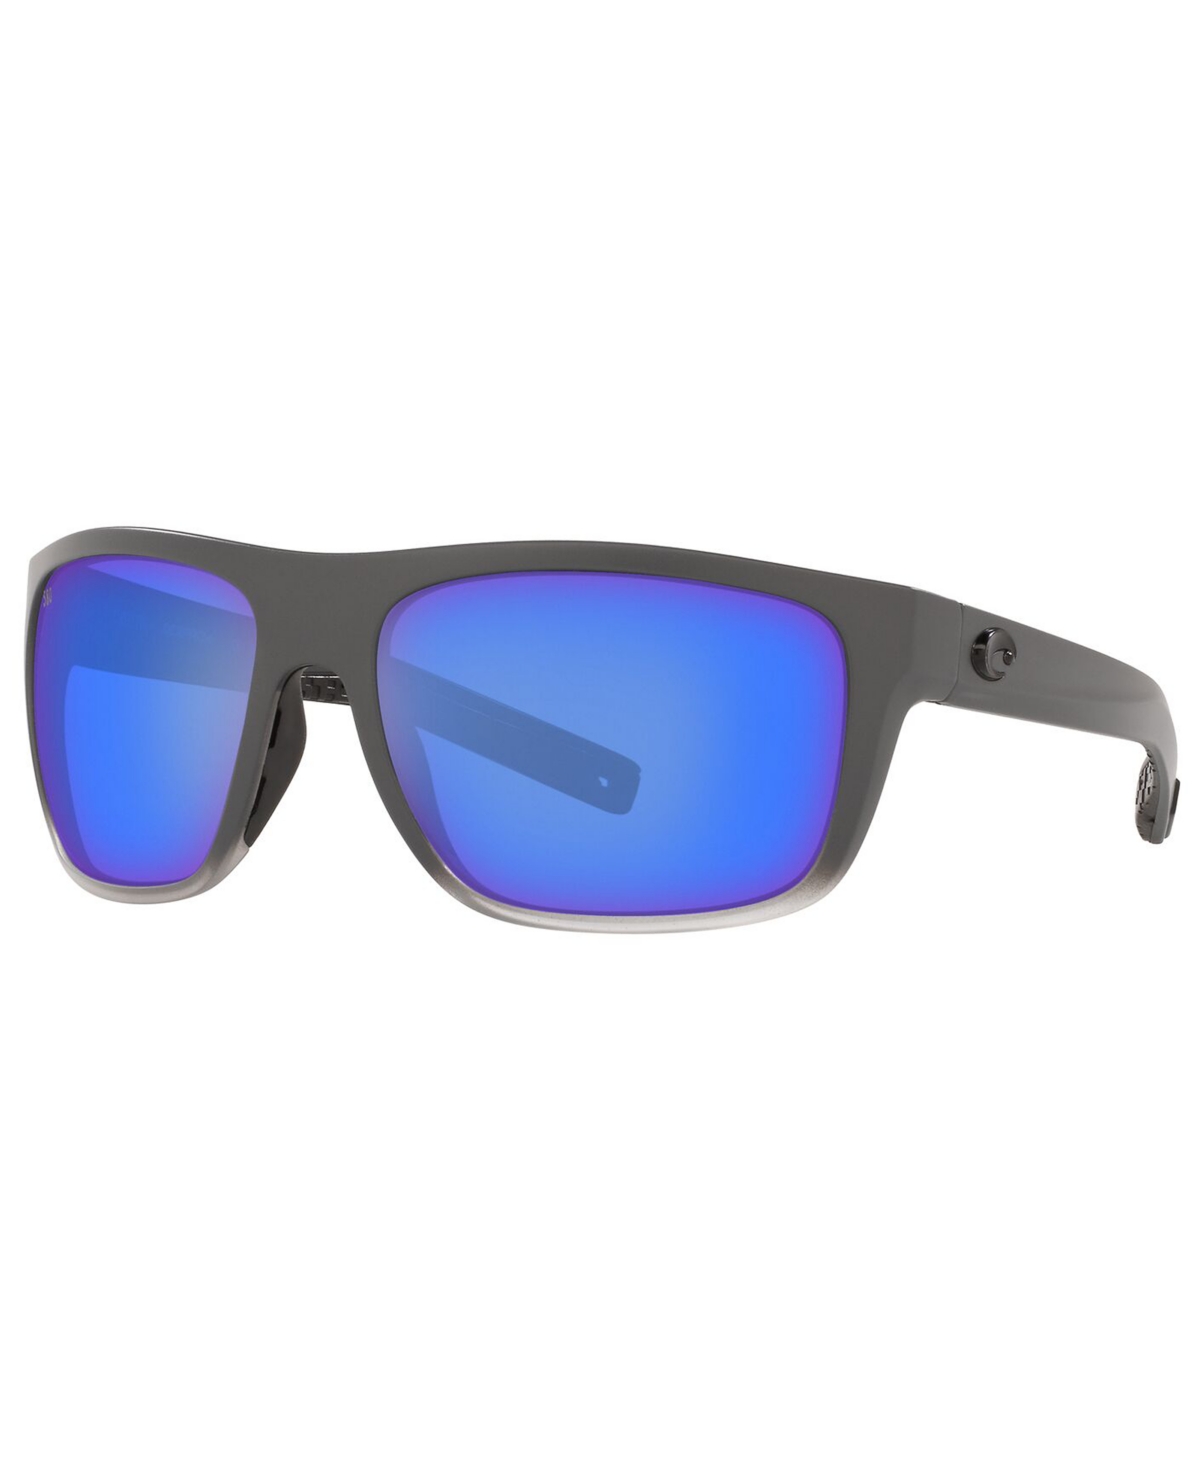 Men's Broadbill Polarized Sunglasses - OCEARCH MATTE FOG GRAY/BLUE MIR